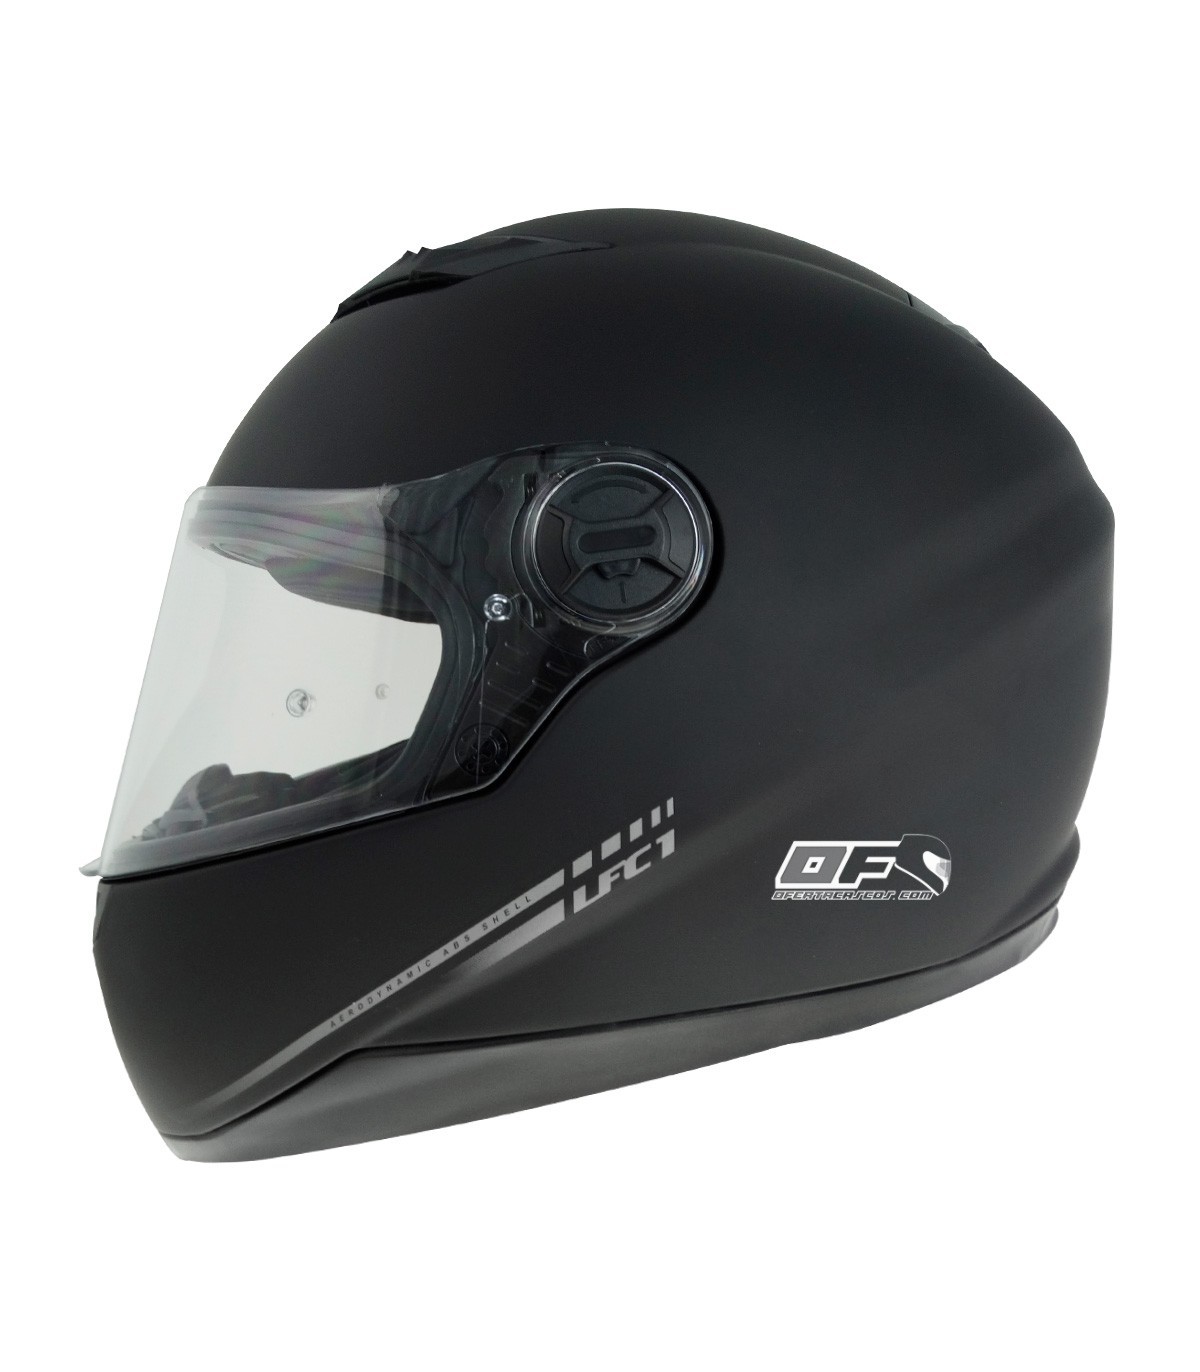 LEVEL LFC1 Mate Casco moto helmets